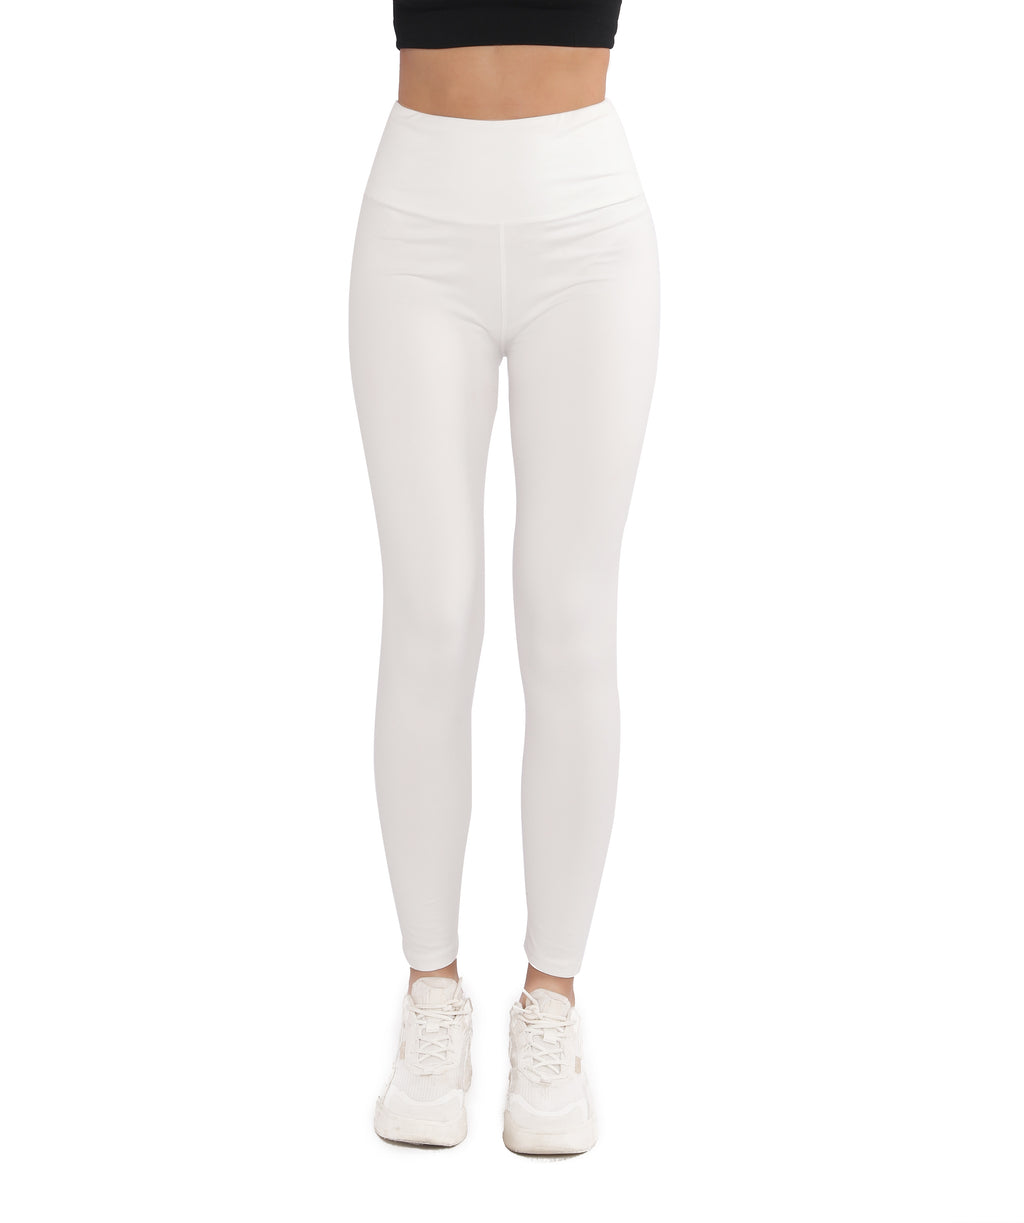 Solid color women's bottom pants Plus size minimalist tight pants Gym